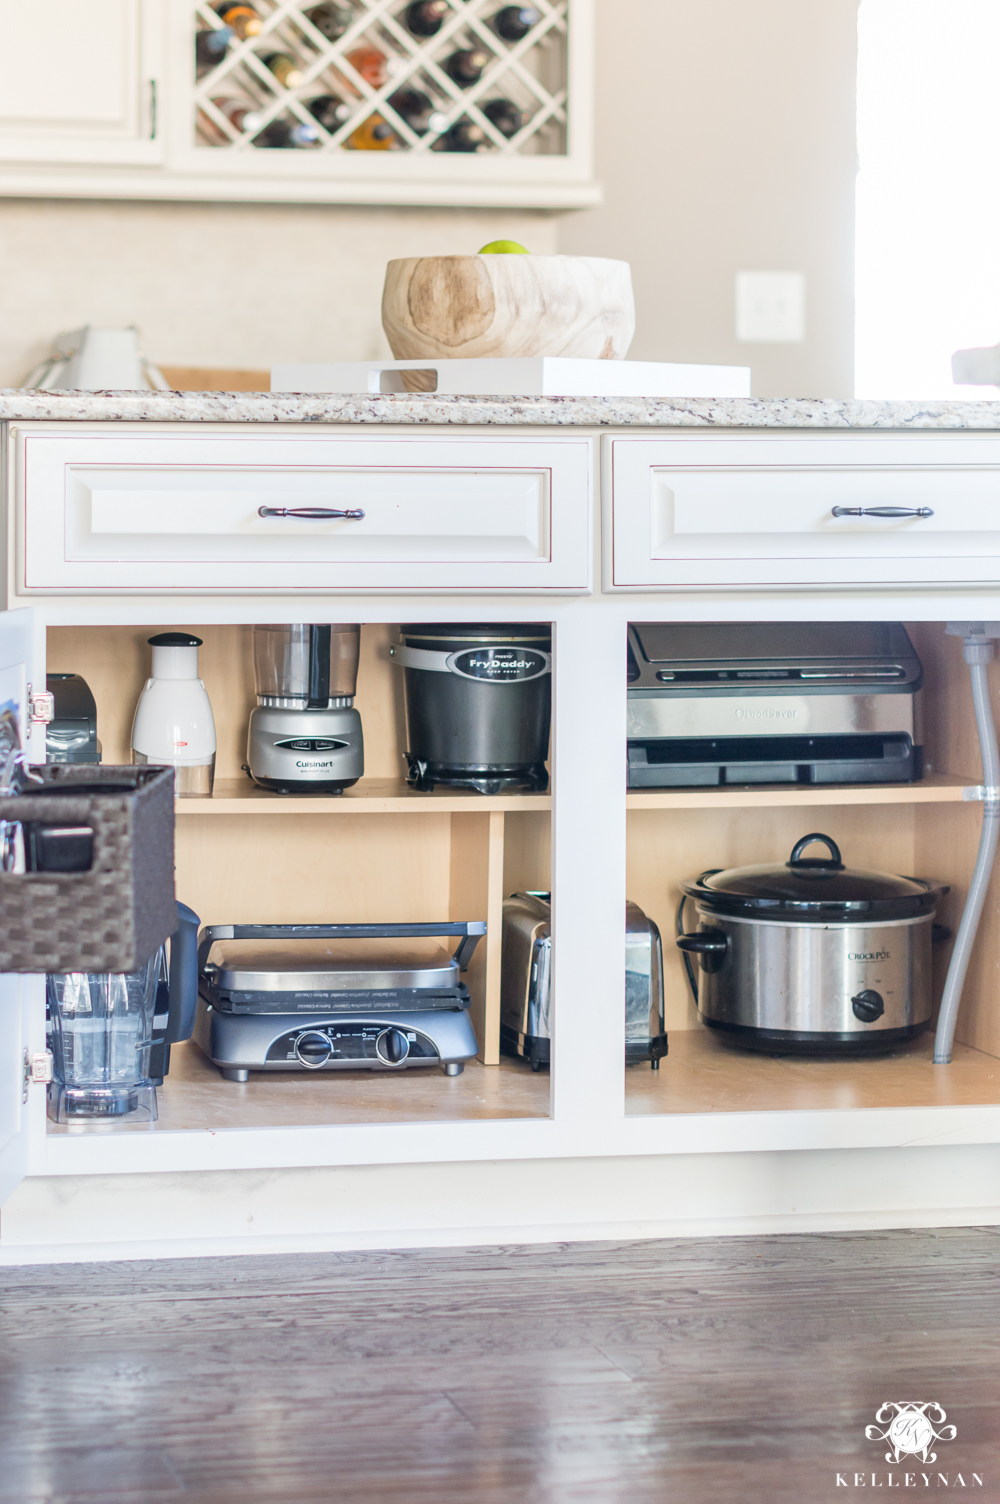 https://kelleynan.com/wp-content/uploads/2018/02/Organized-Kitchen-Cabinets-Appliance-Organization-Ideas.jpg